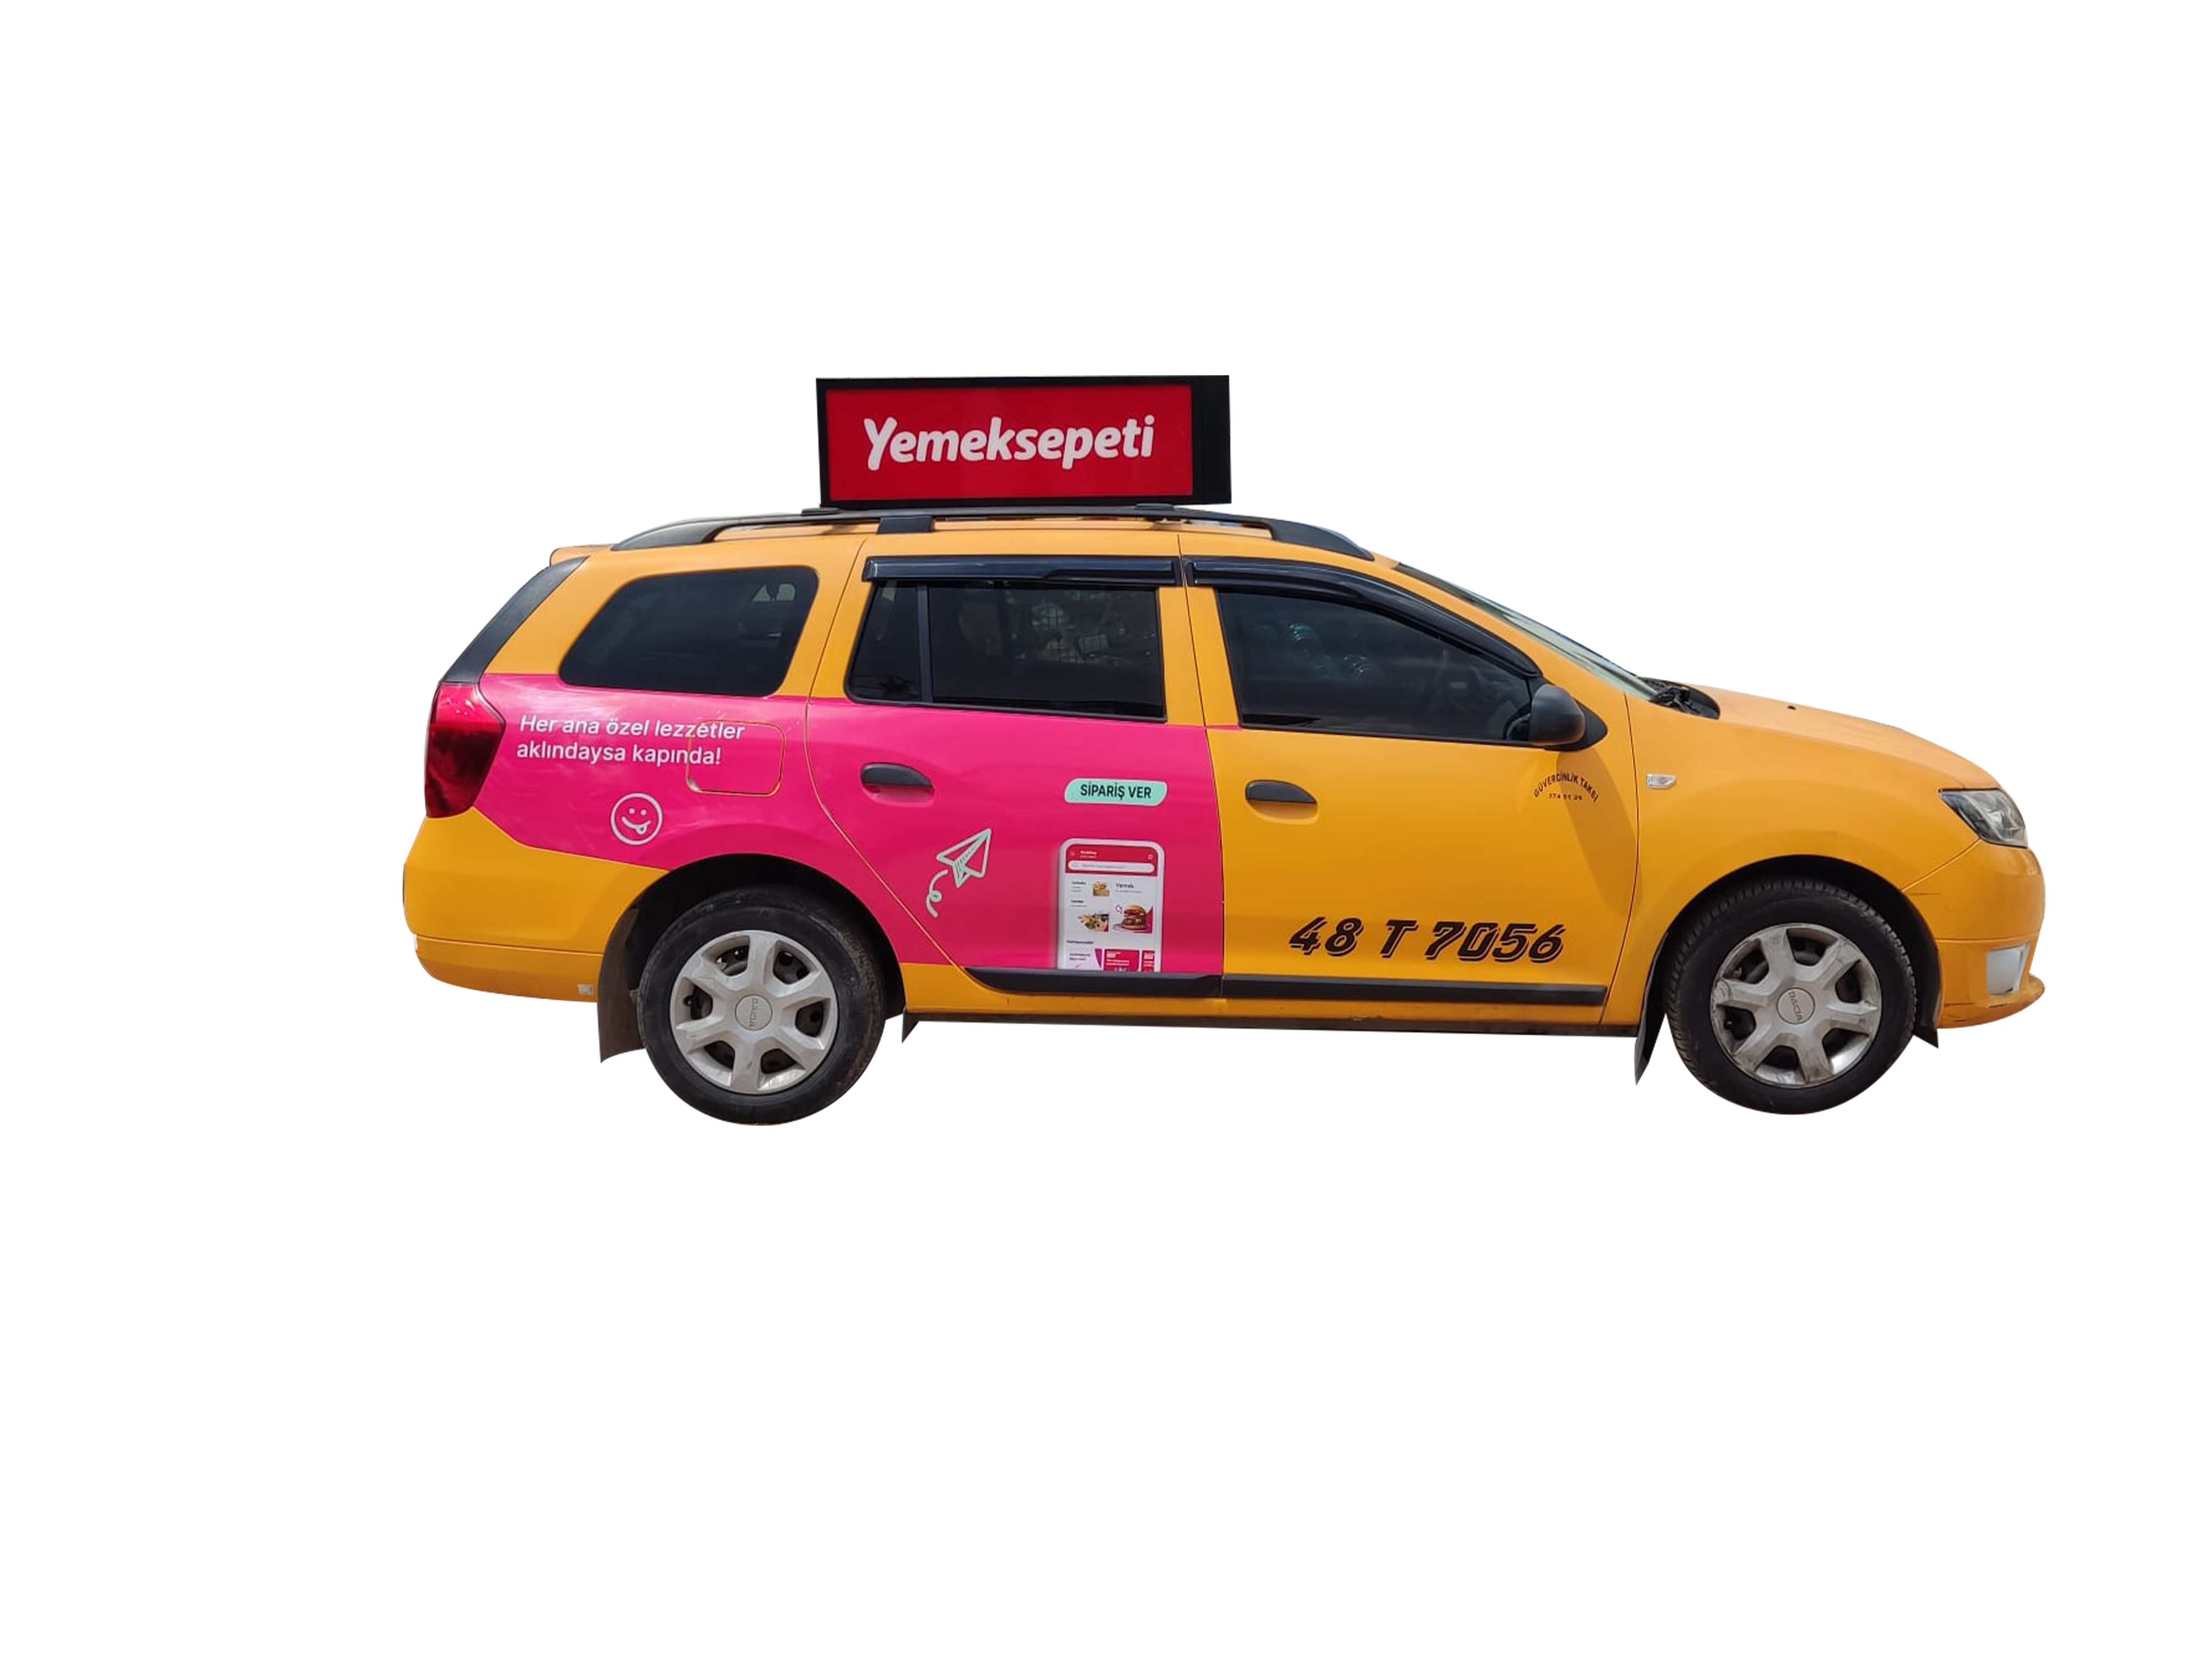 yemeksepeti taksi ustu isikli pano bodrum taksi reklamlari